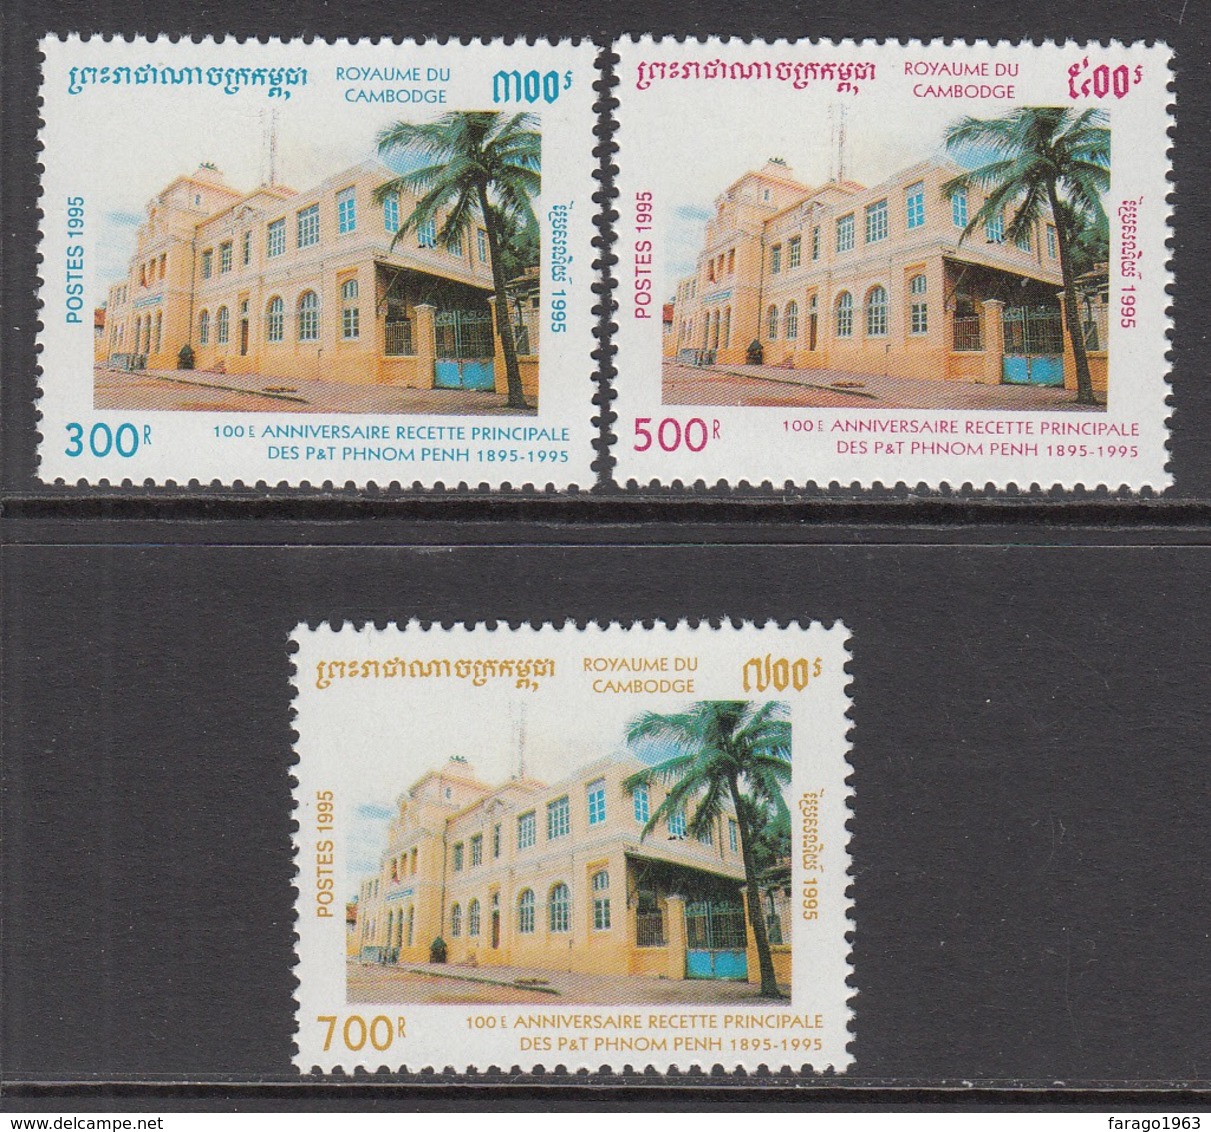 1995 Cambodia Post Office Architecture Complete Set Of 3 MNH - Cambodia